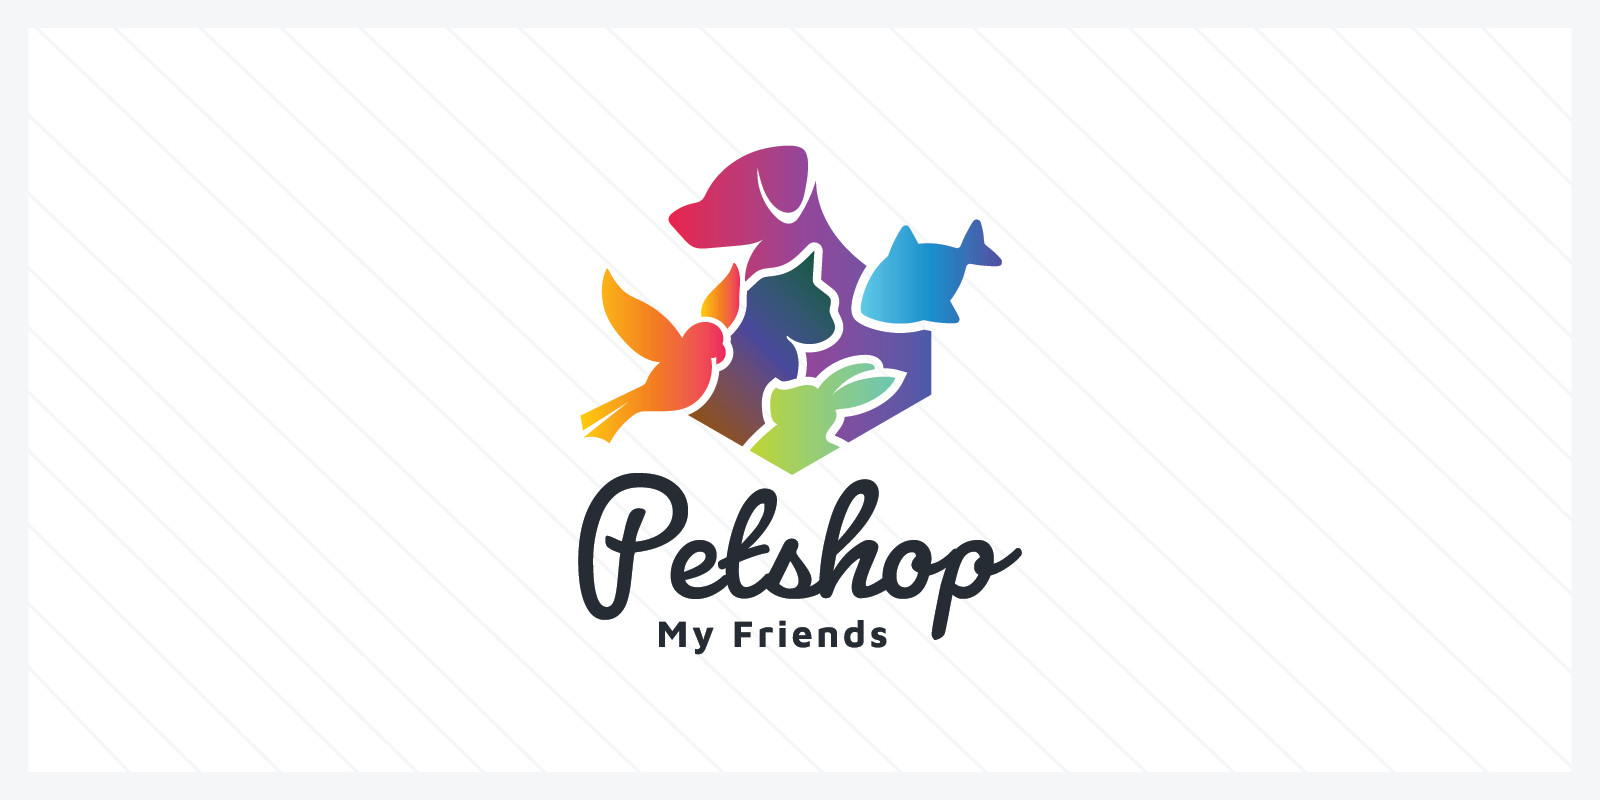 Pet Shop Logo by Modernikdesign